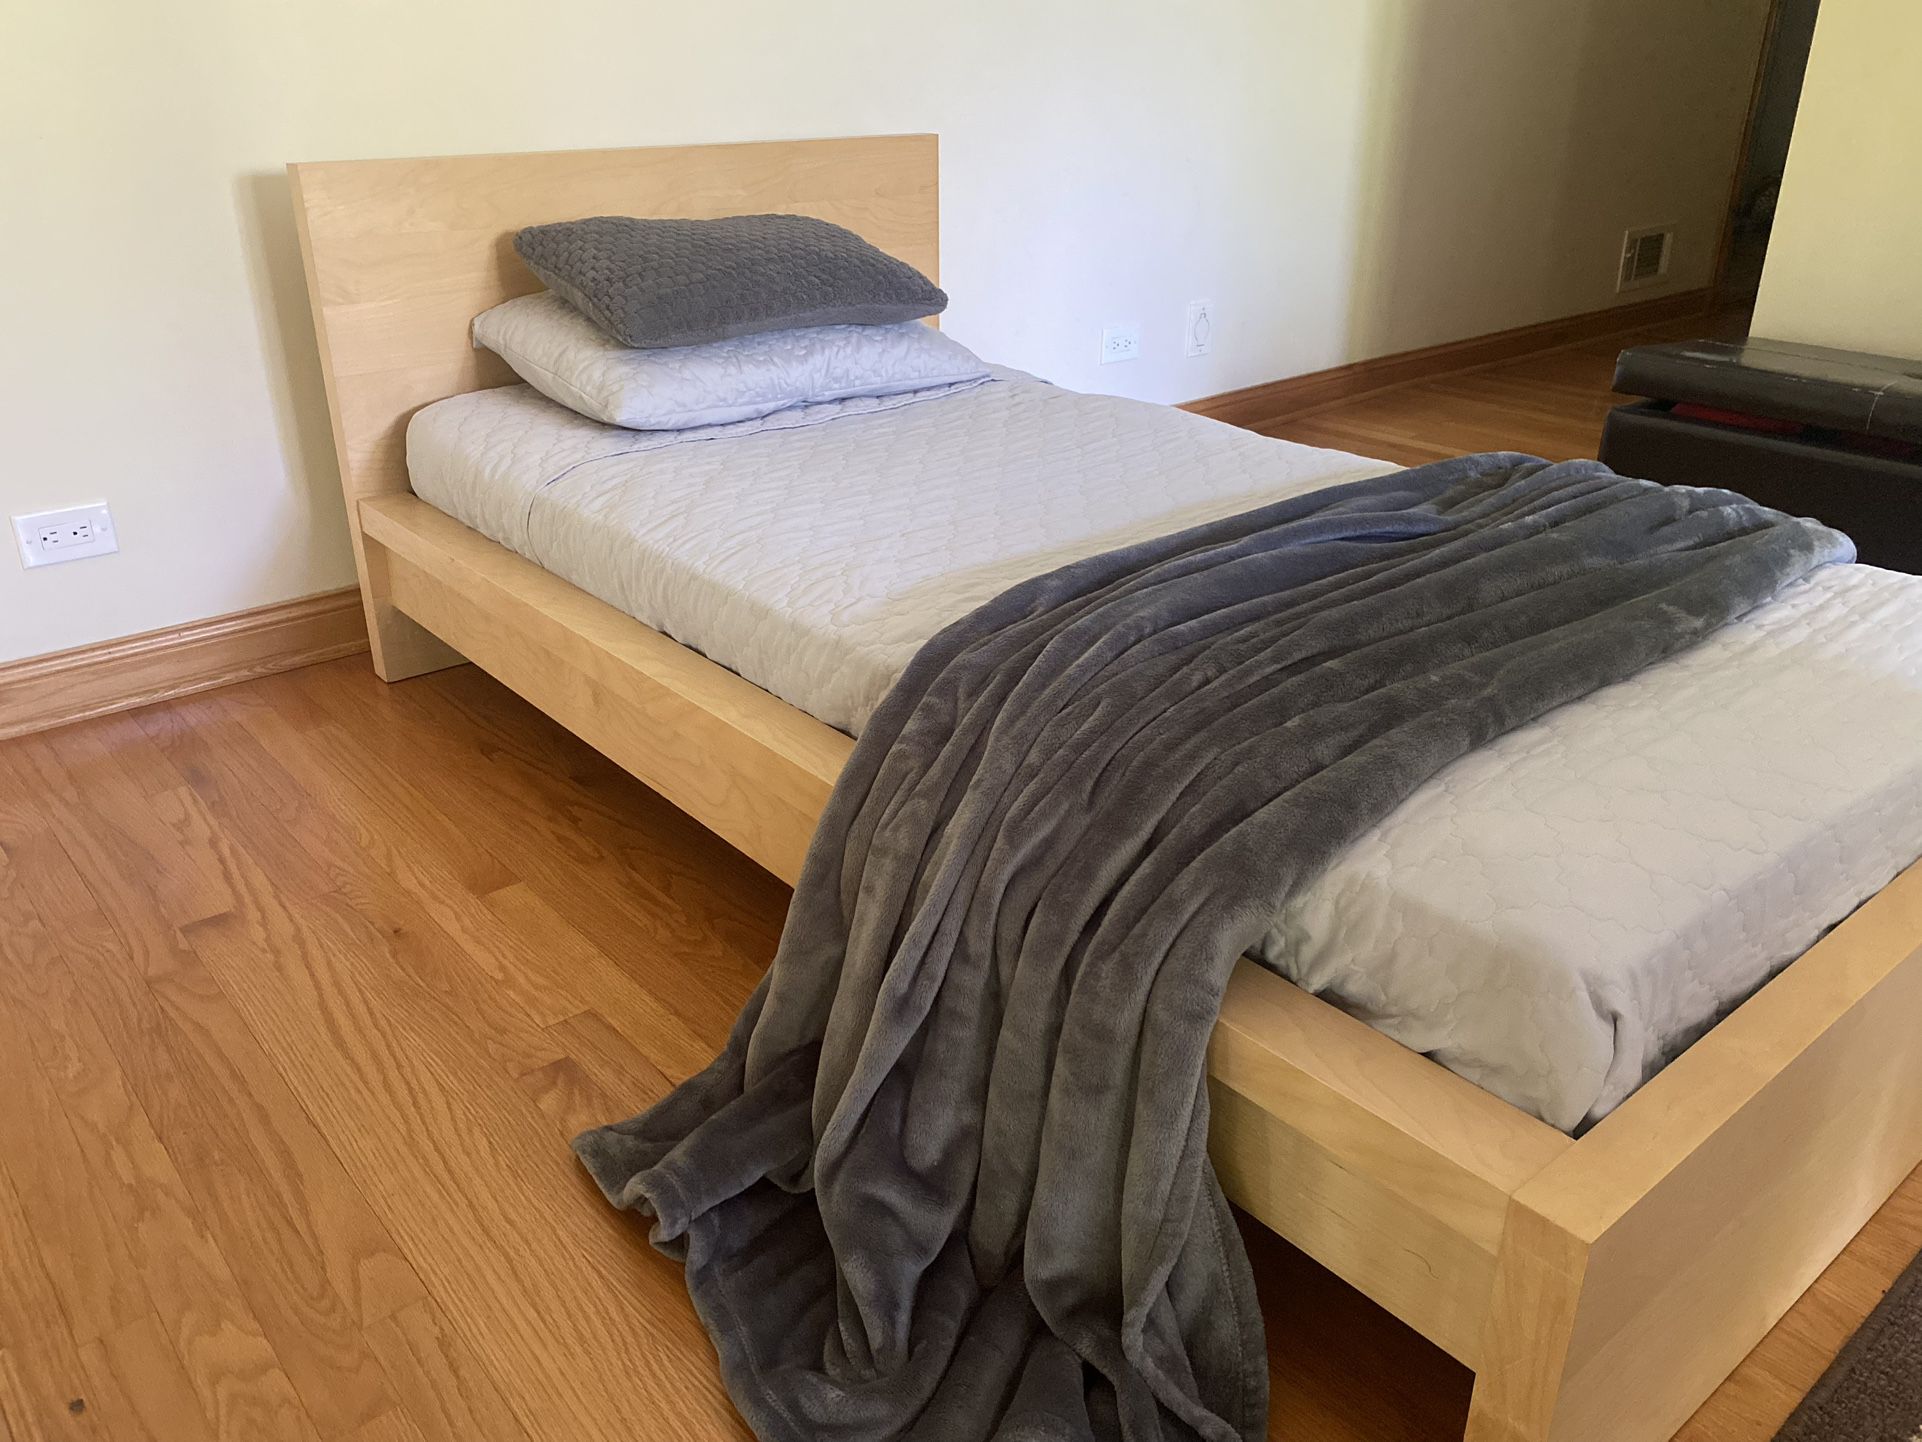 IKEA Twin Bed Frame $40